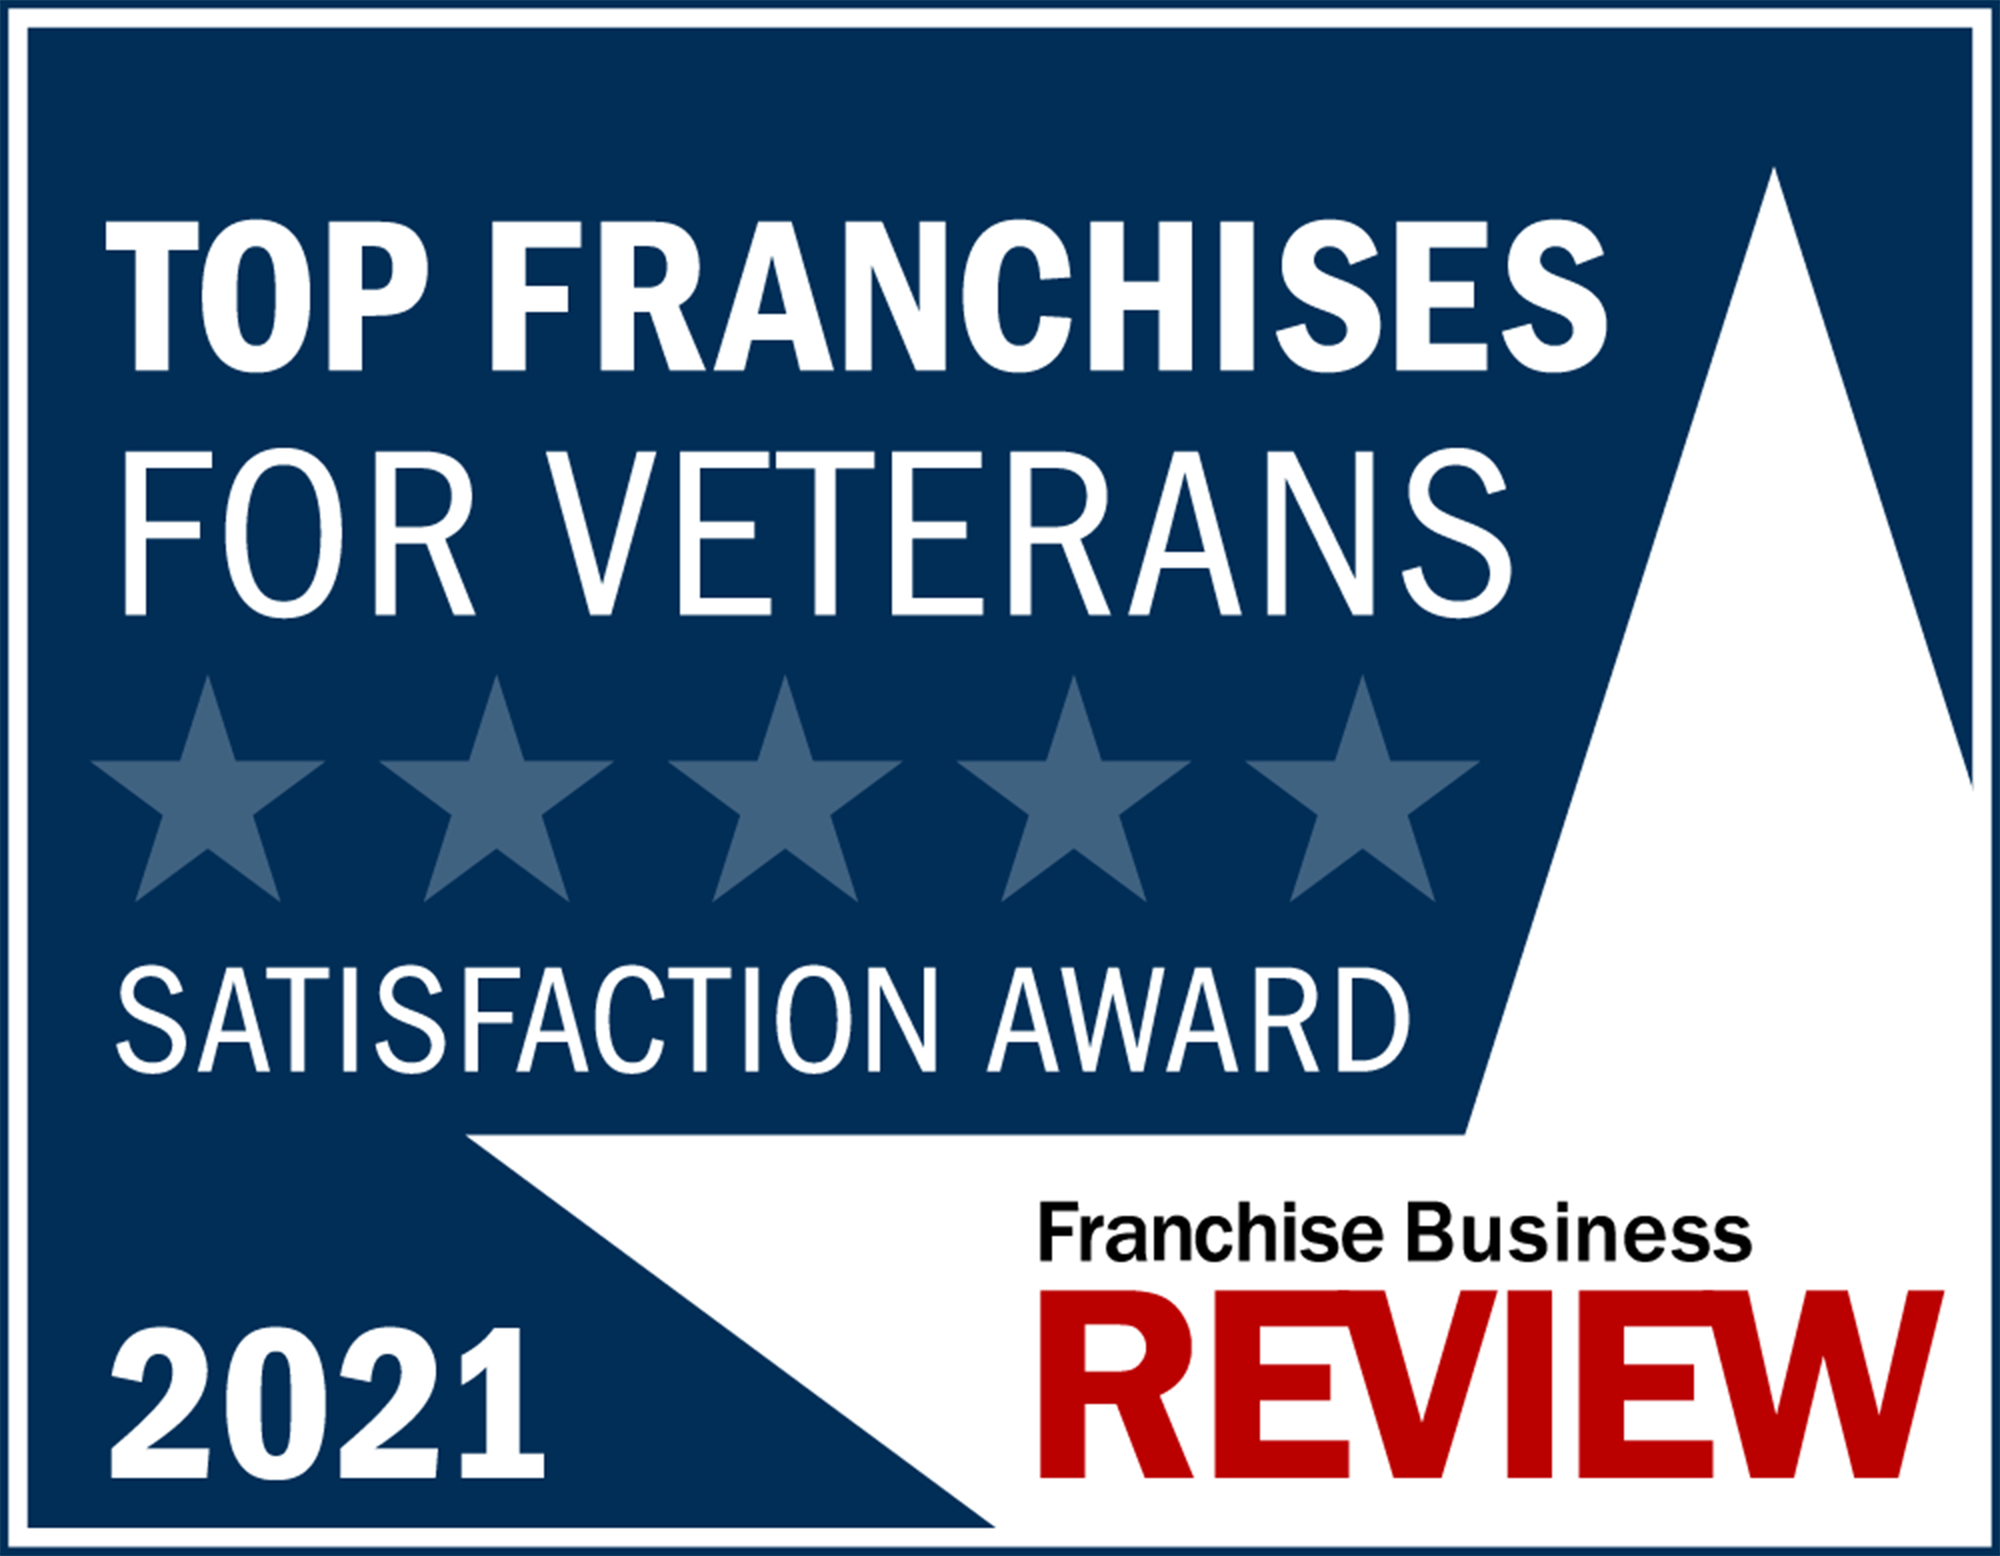 2021 Franchise Business Review Top Franchises for Veterans